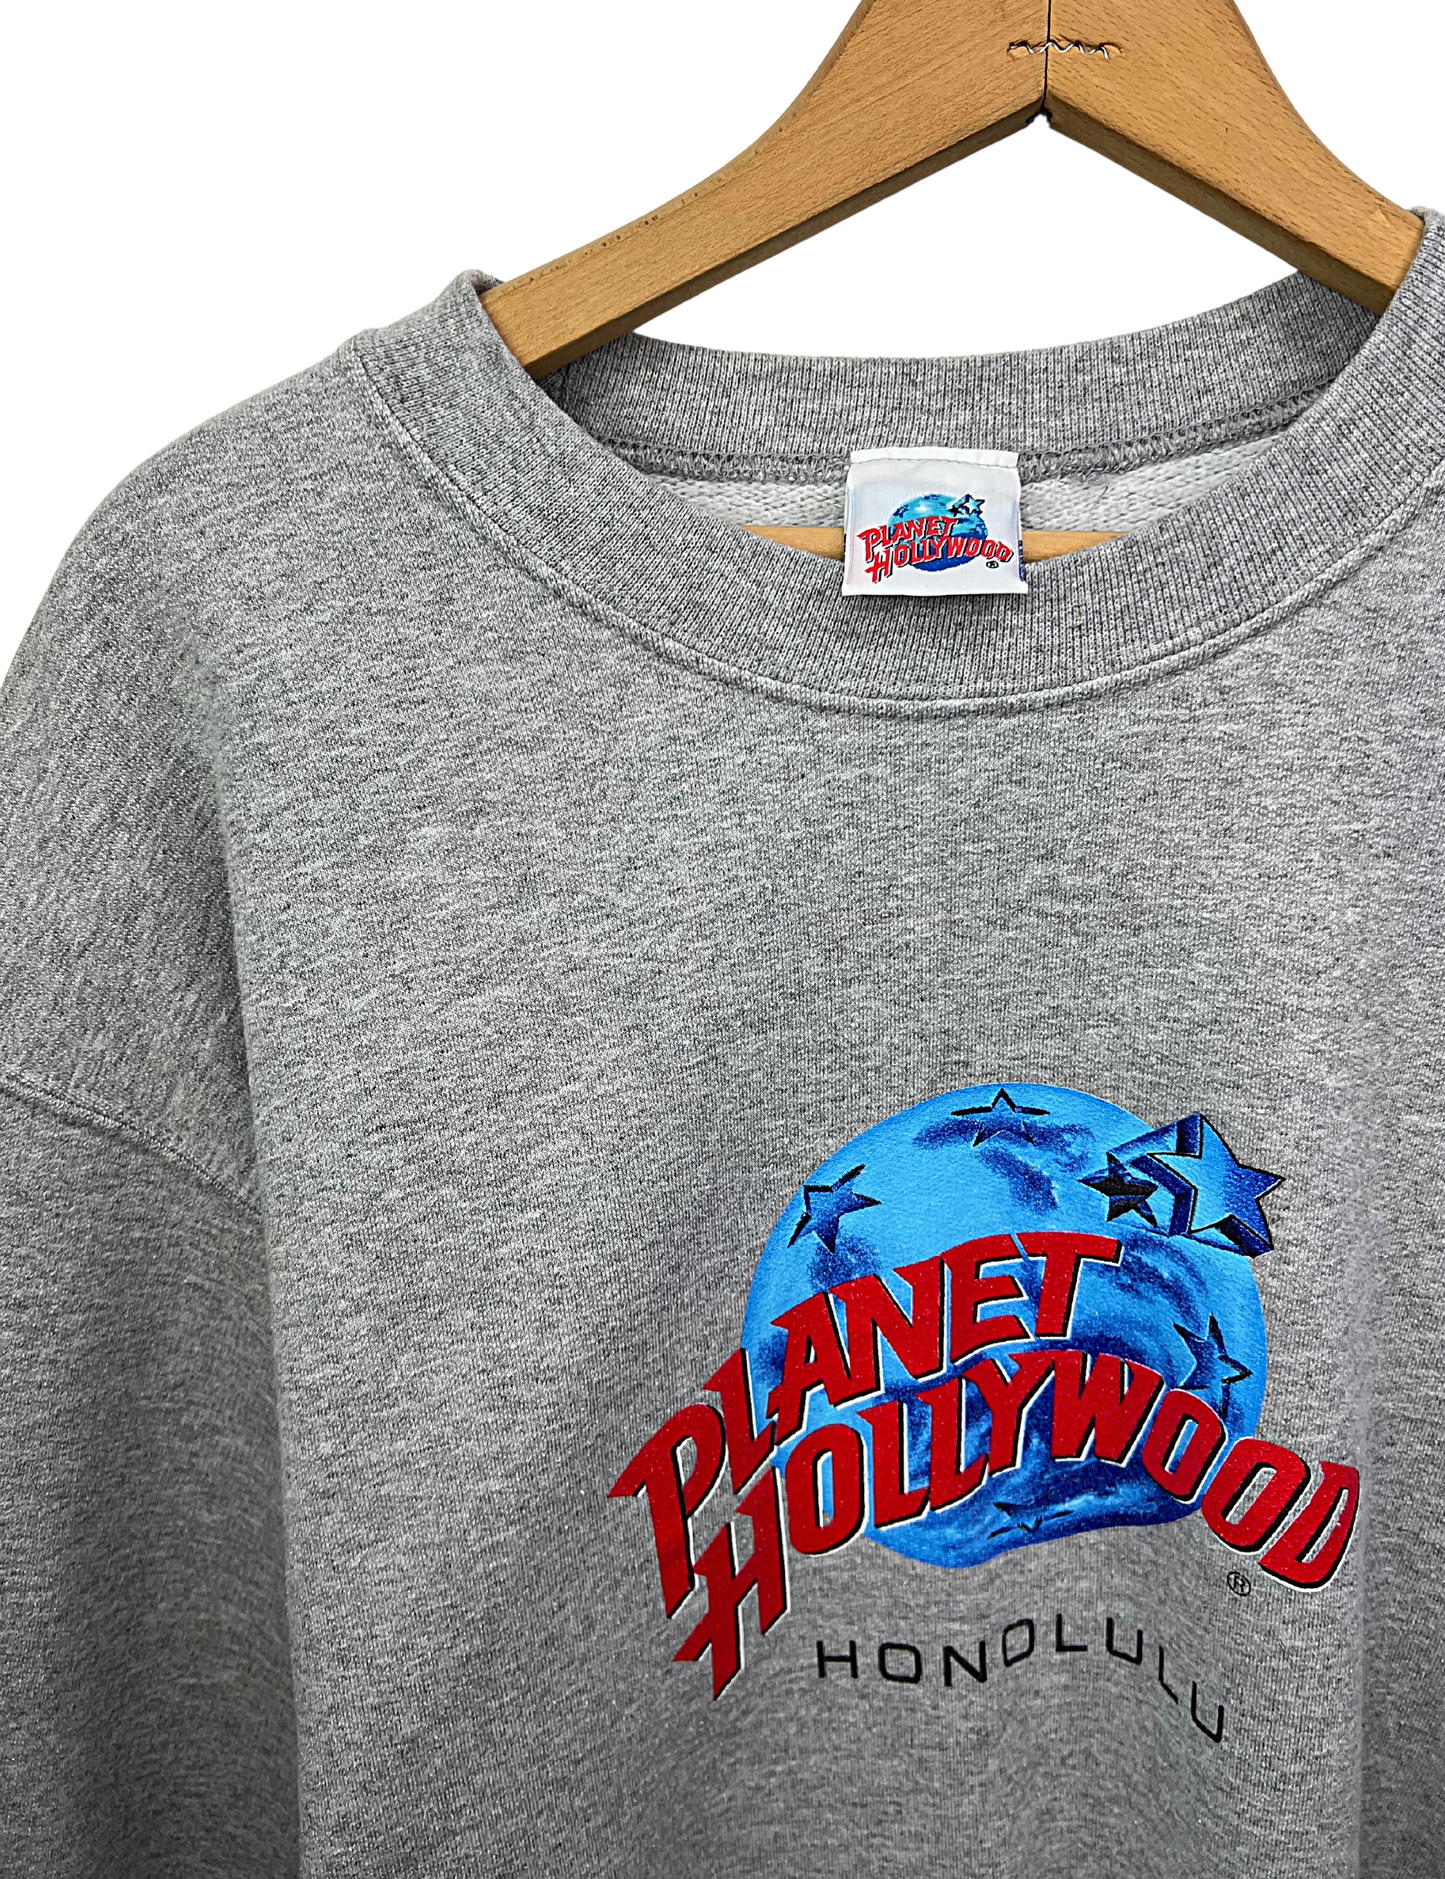 1998 Planet Hollywood Honolulu Hawaii Souvenir Sweatshirt